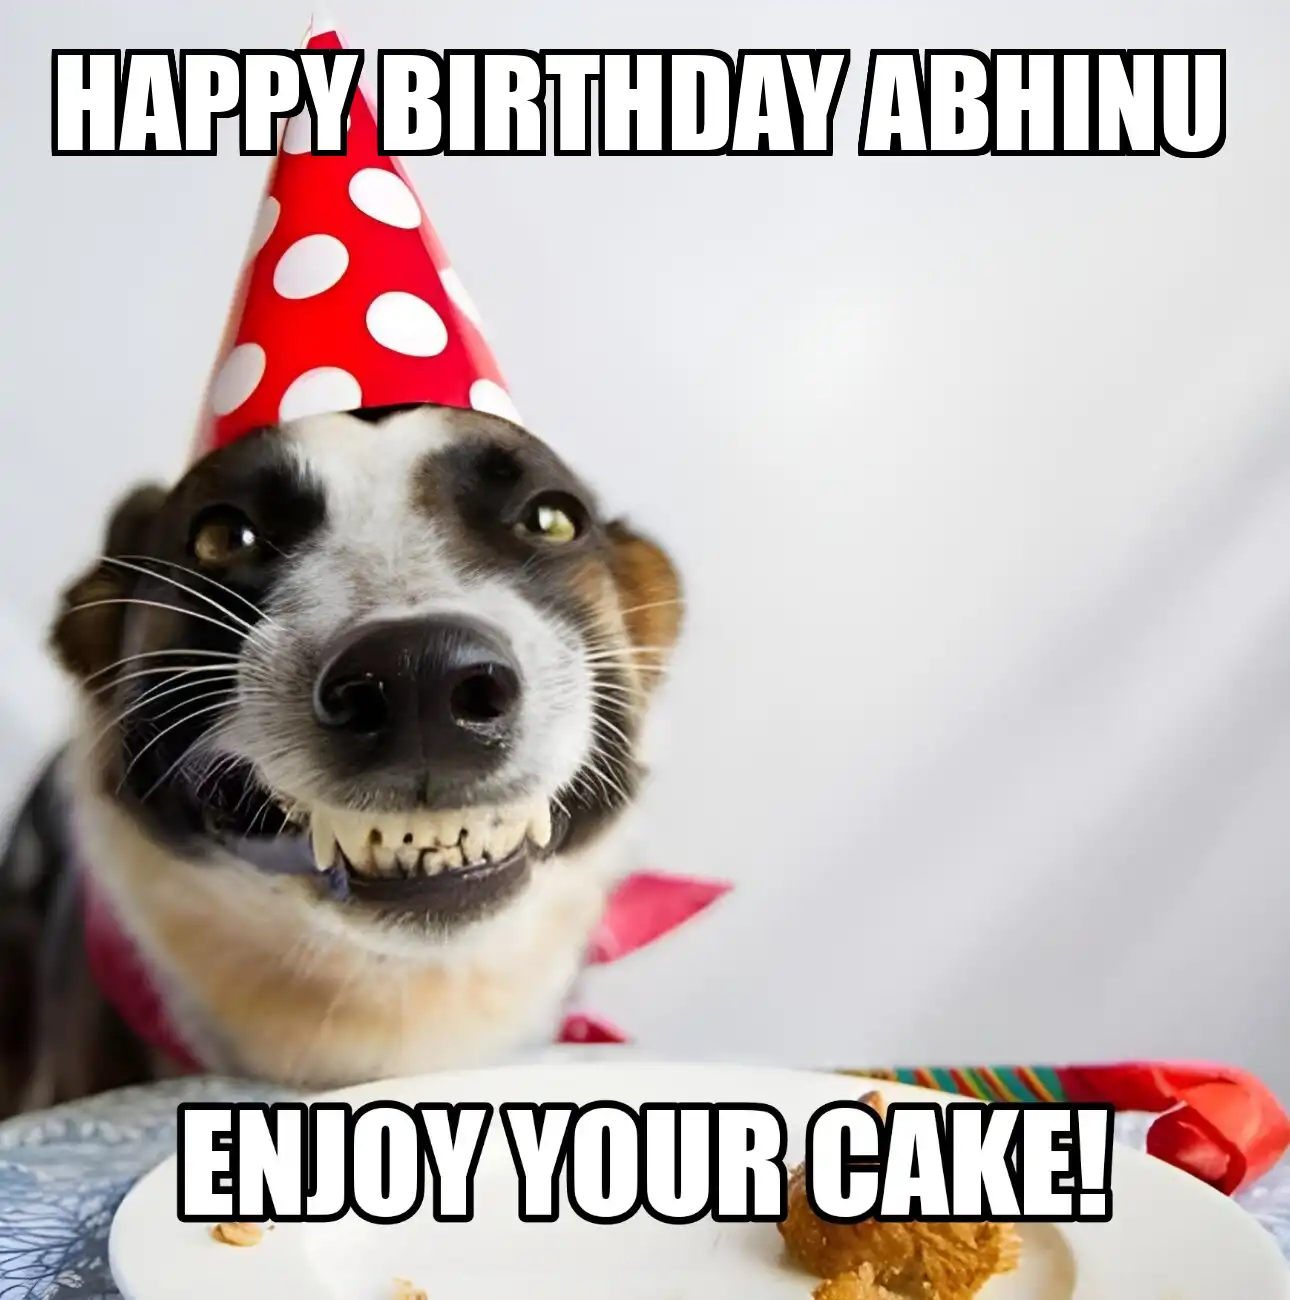 Happy Birthday Abhinu Enjoy Your Cake Dog Meme